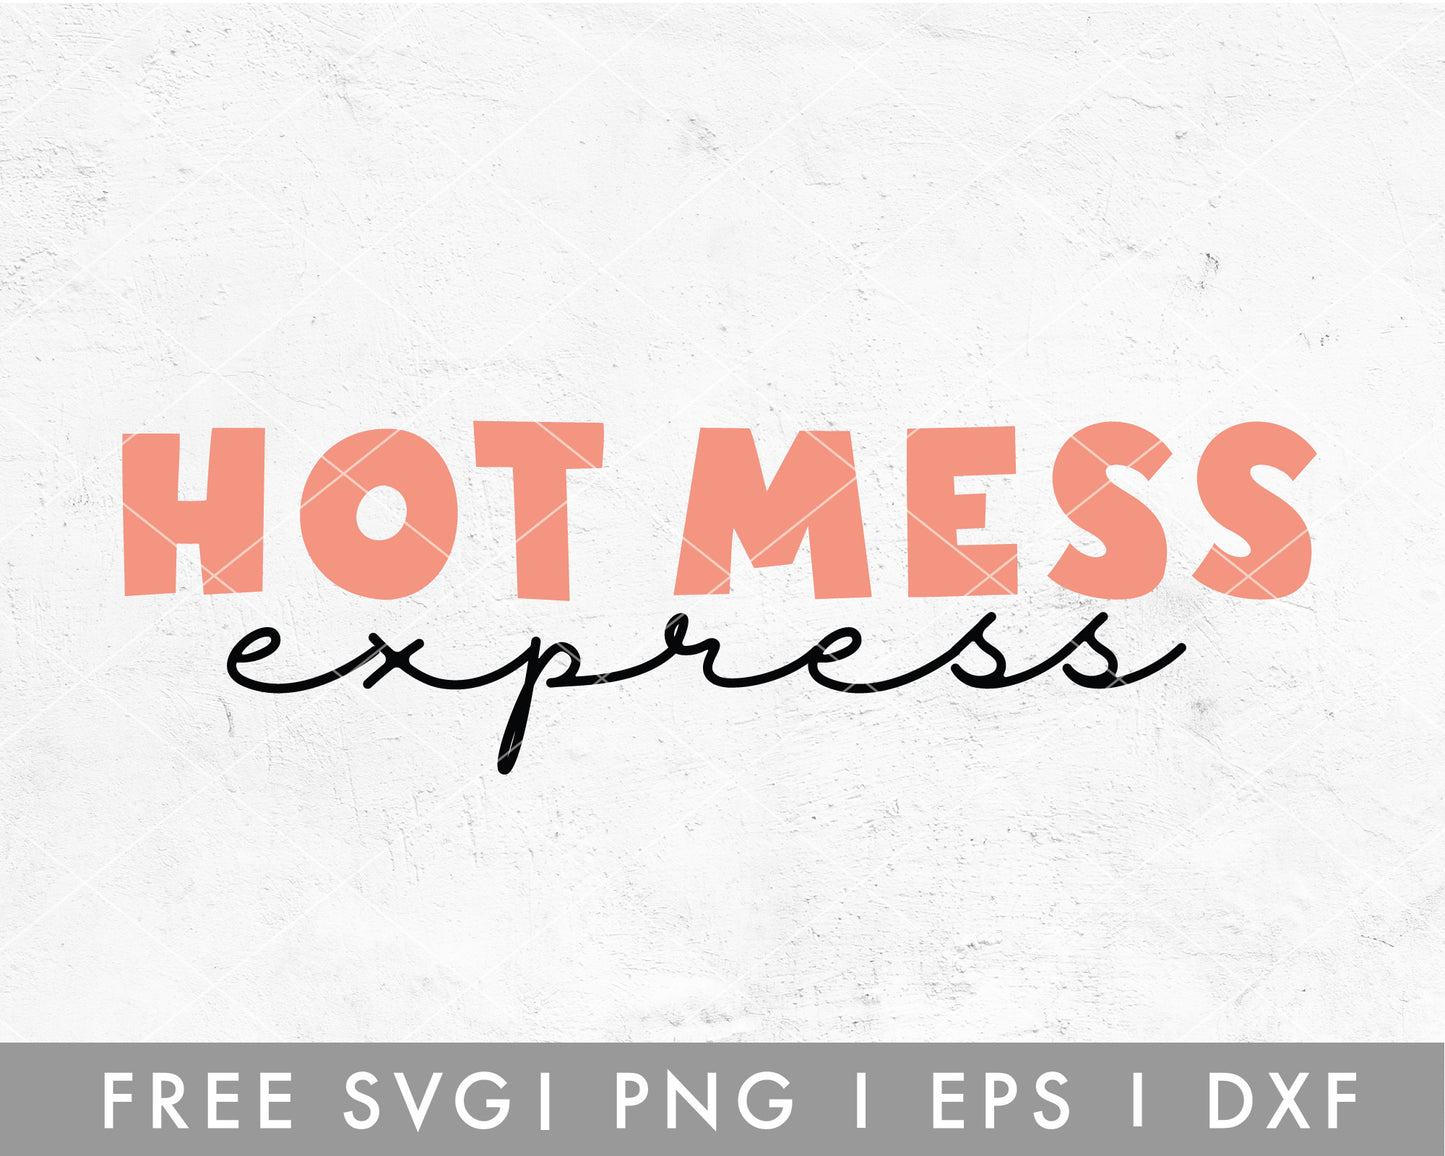 FREE Hotmess Express SVG